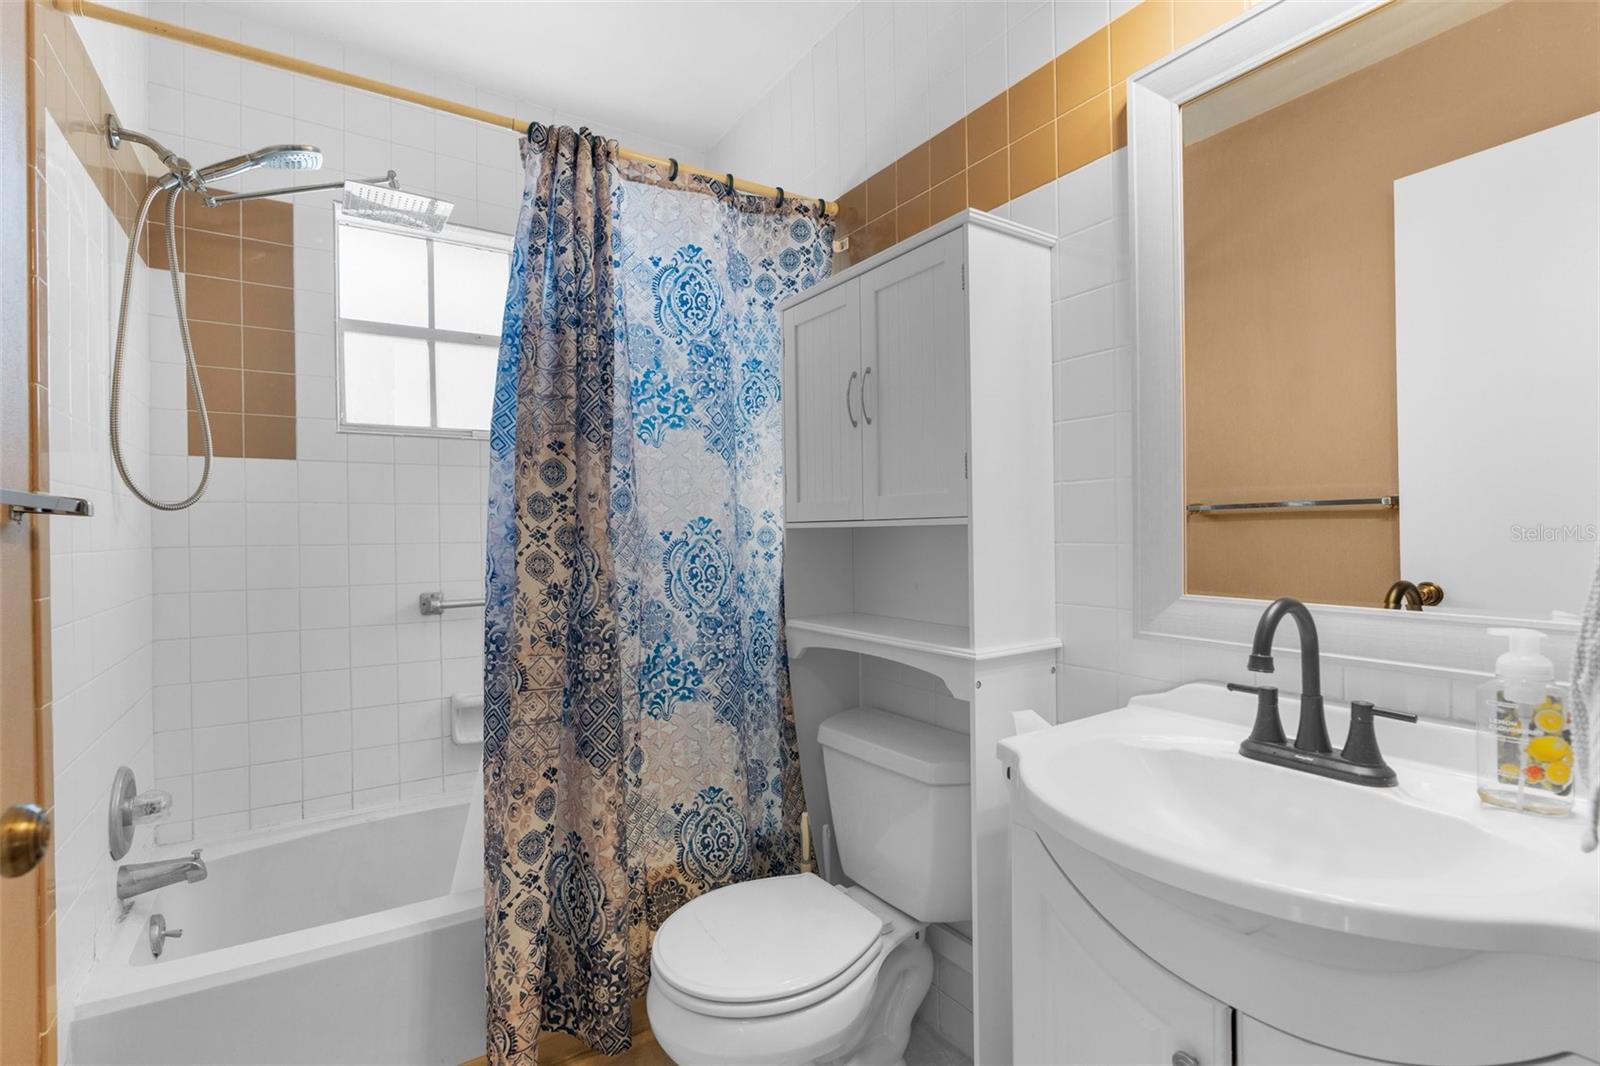 The Bathroom has a Tub/Shower Combo